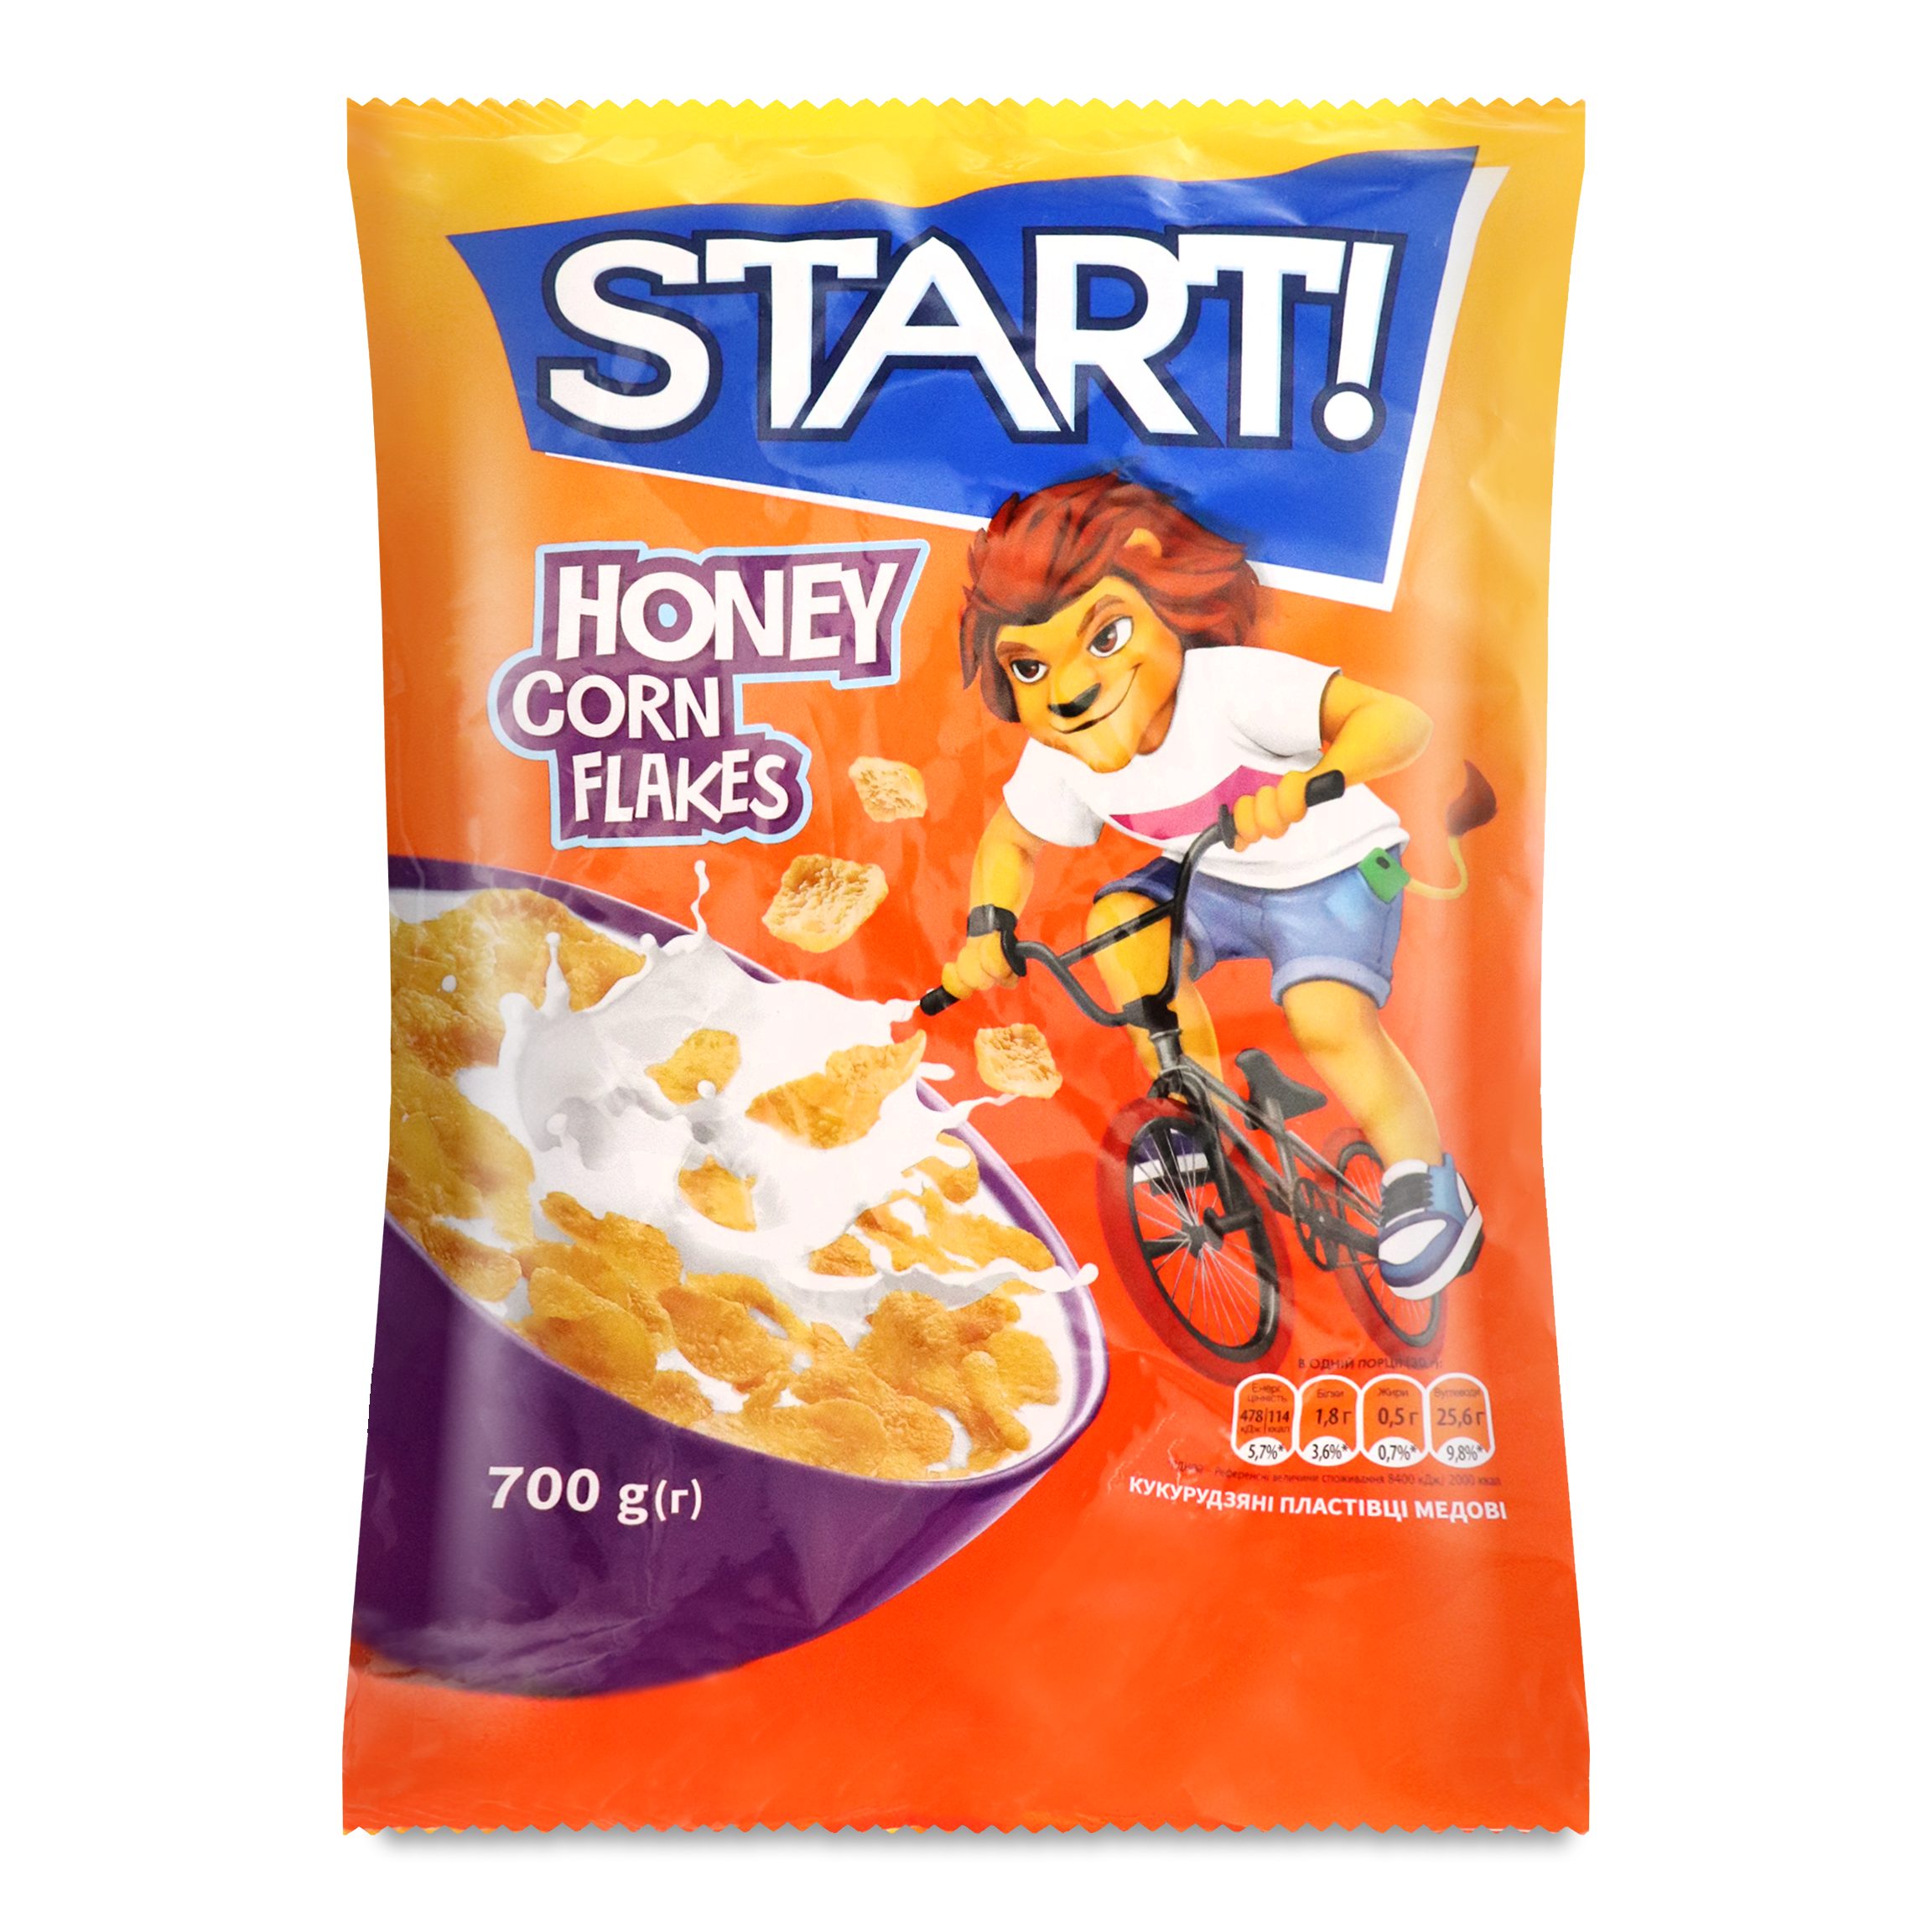 Start! Honey Corn Flakes 700g